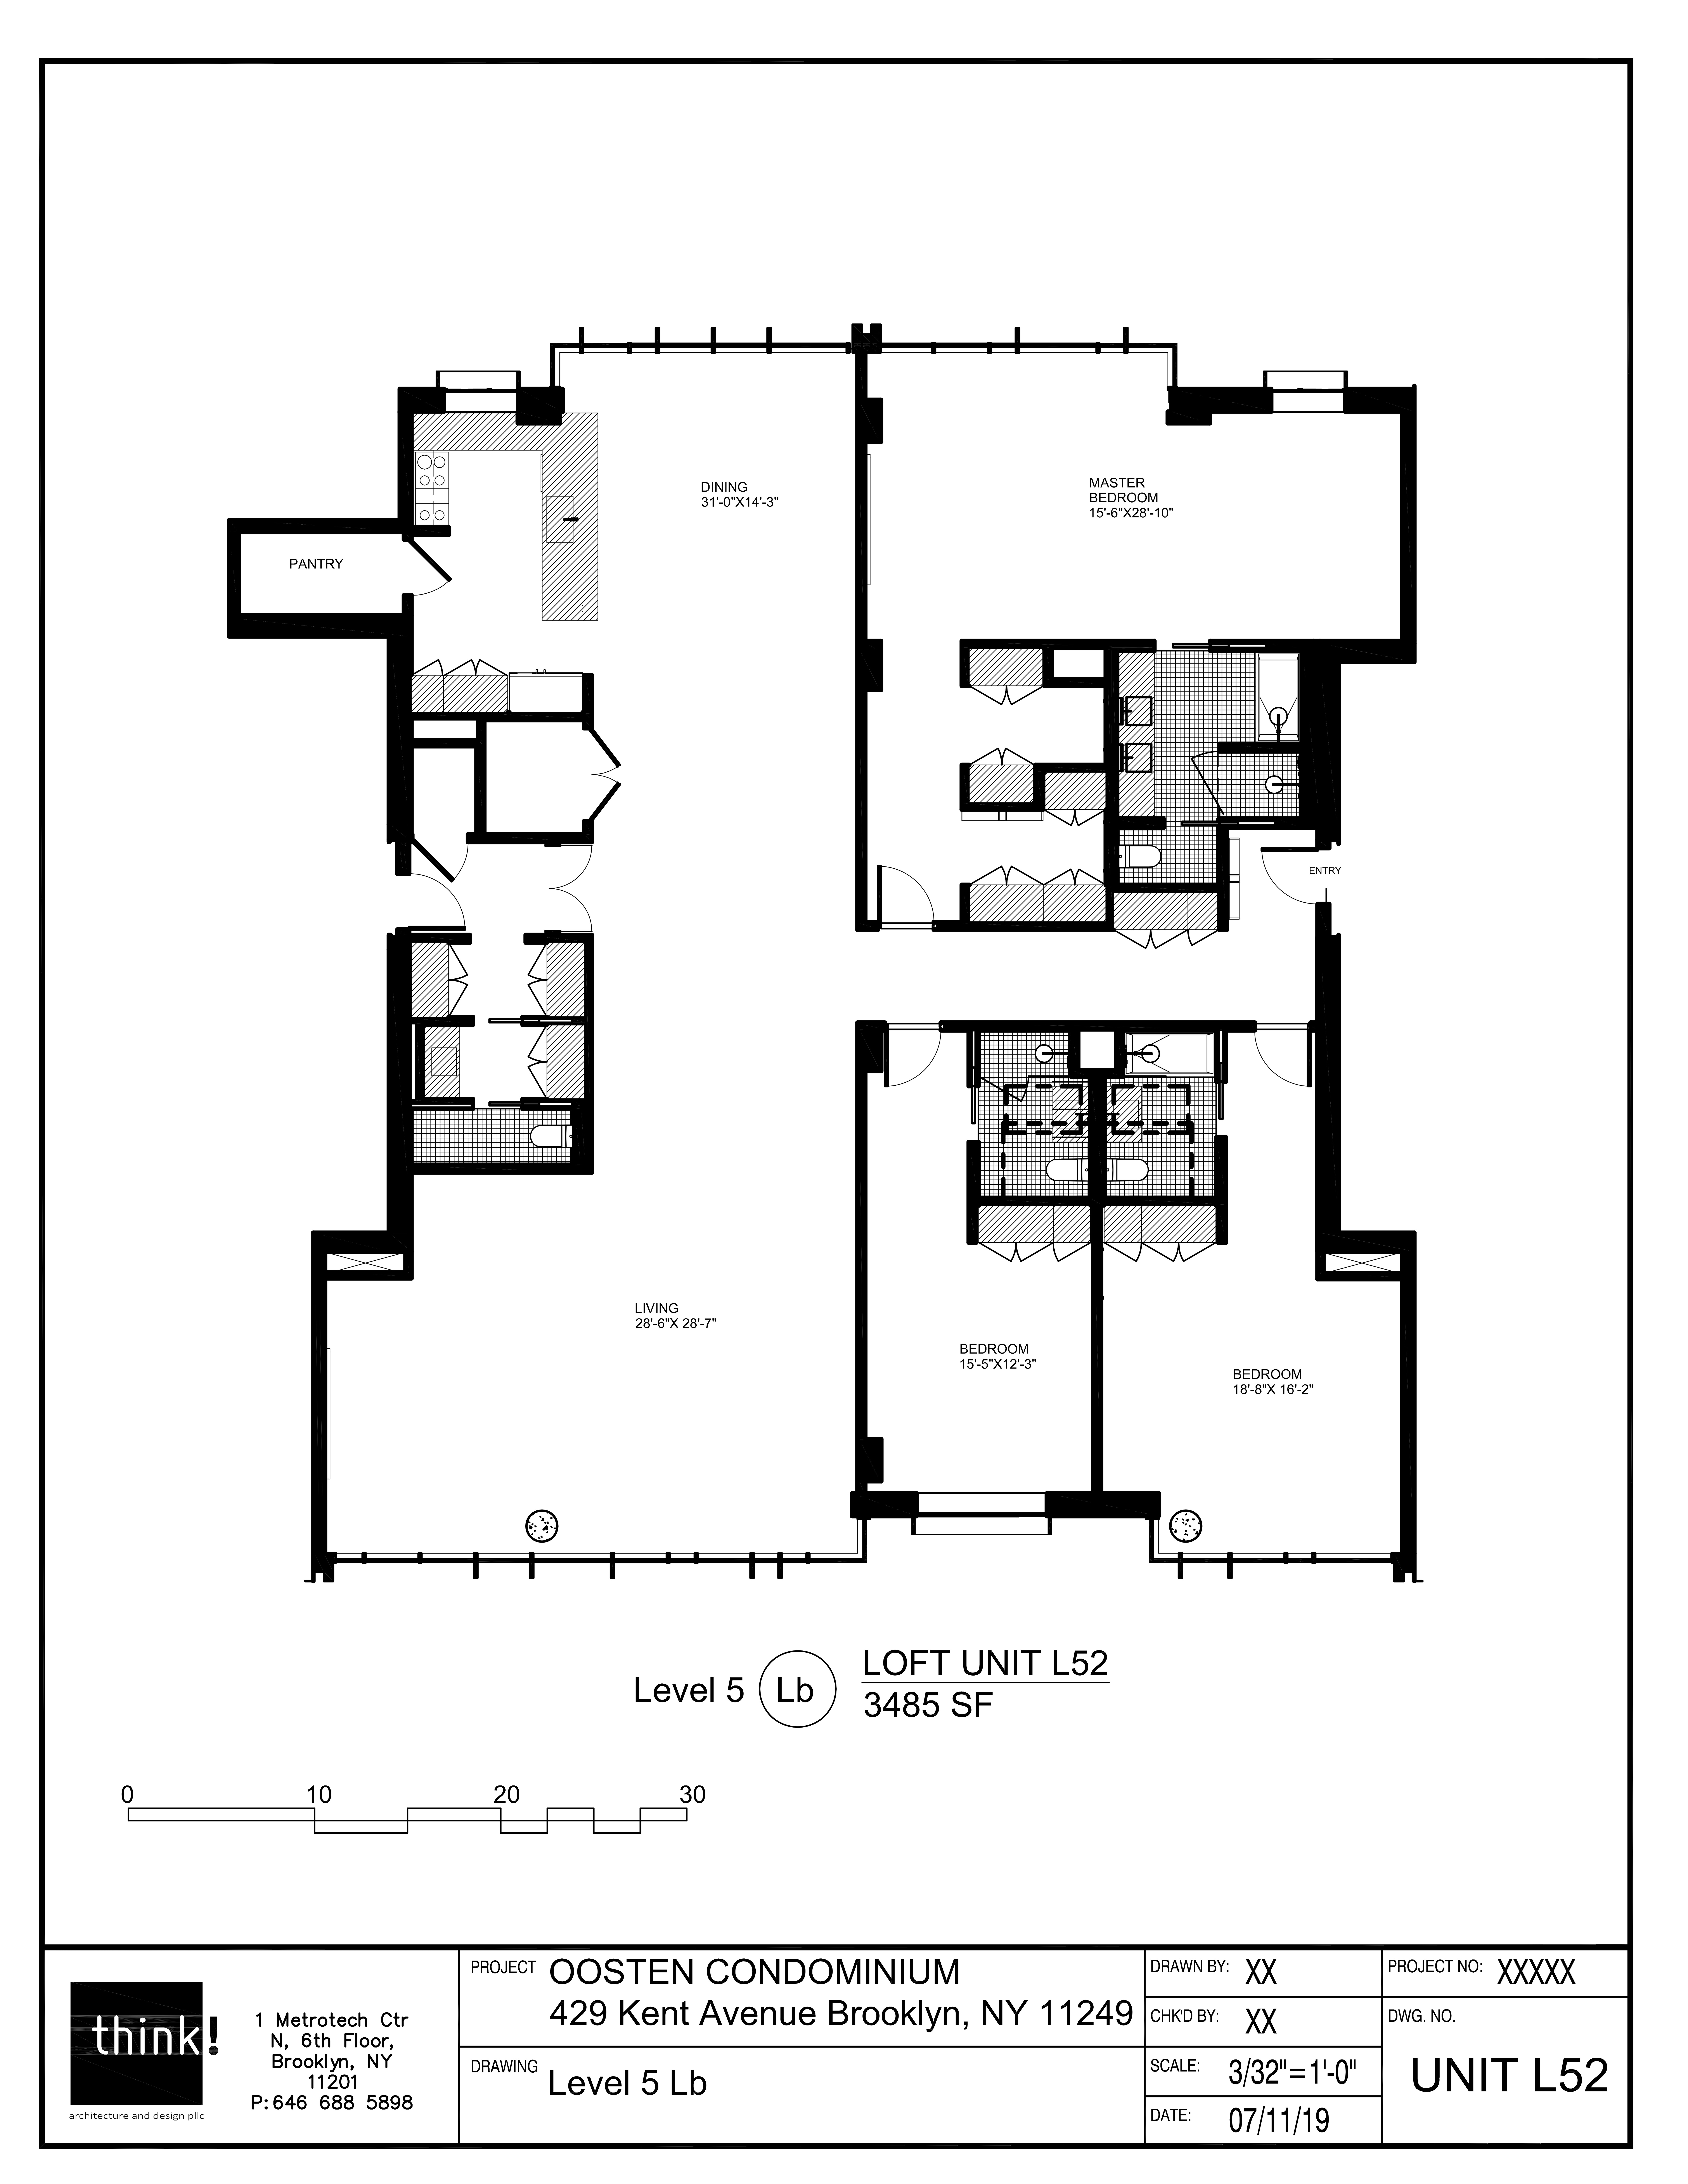 Floorplan for 429 Kent Avenue, L52